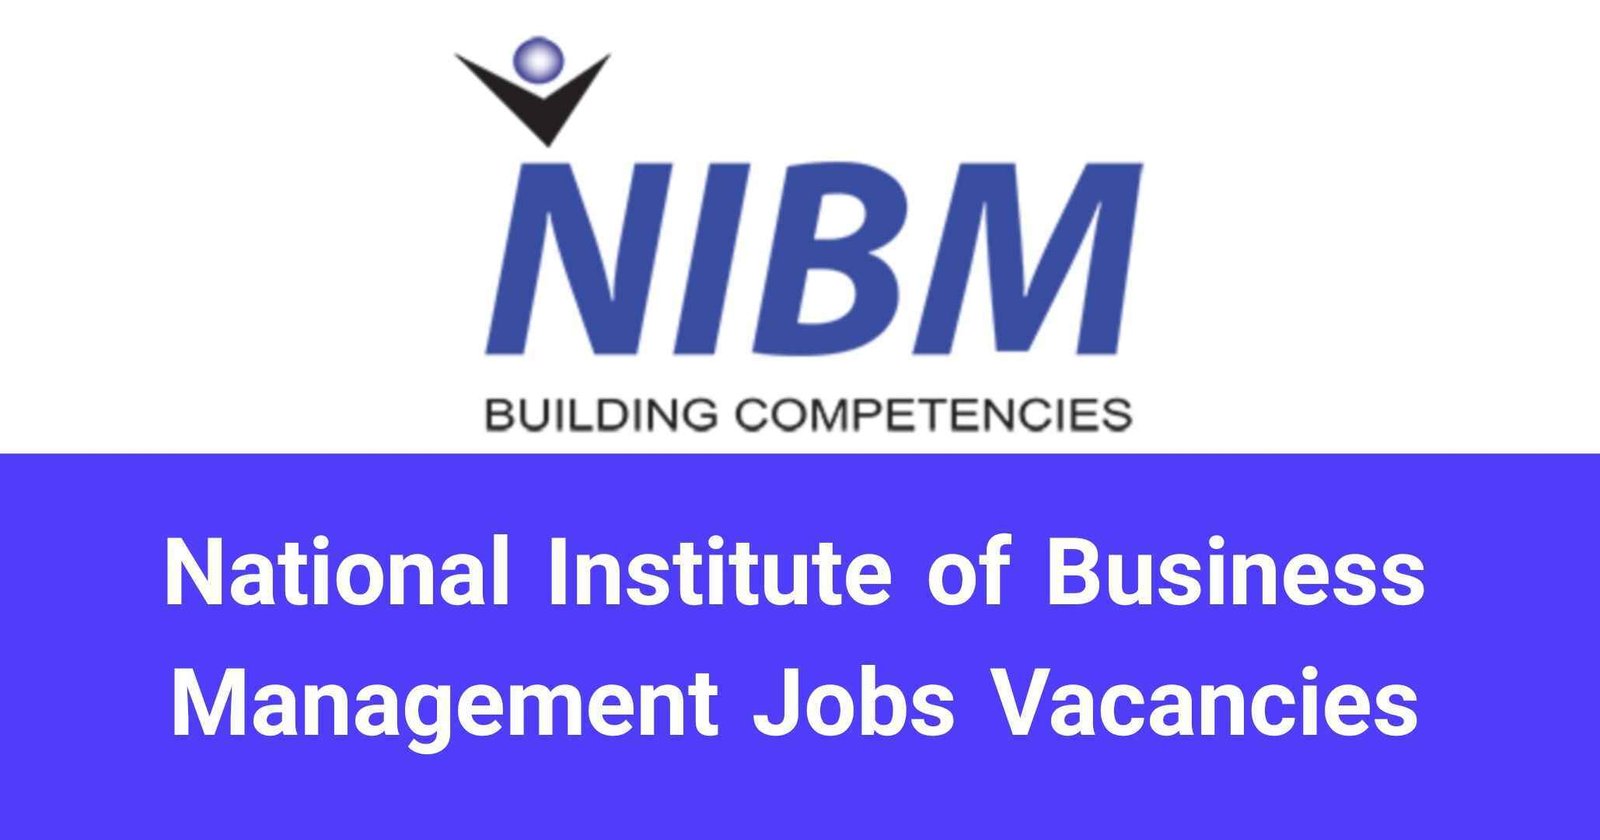 National Institute of Business Management Jobs Vacancies Careers